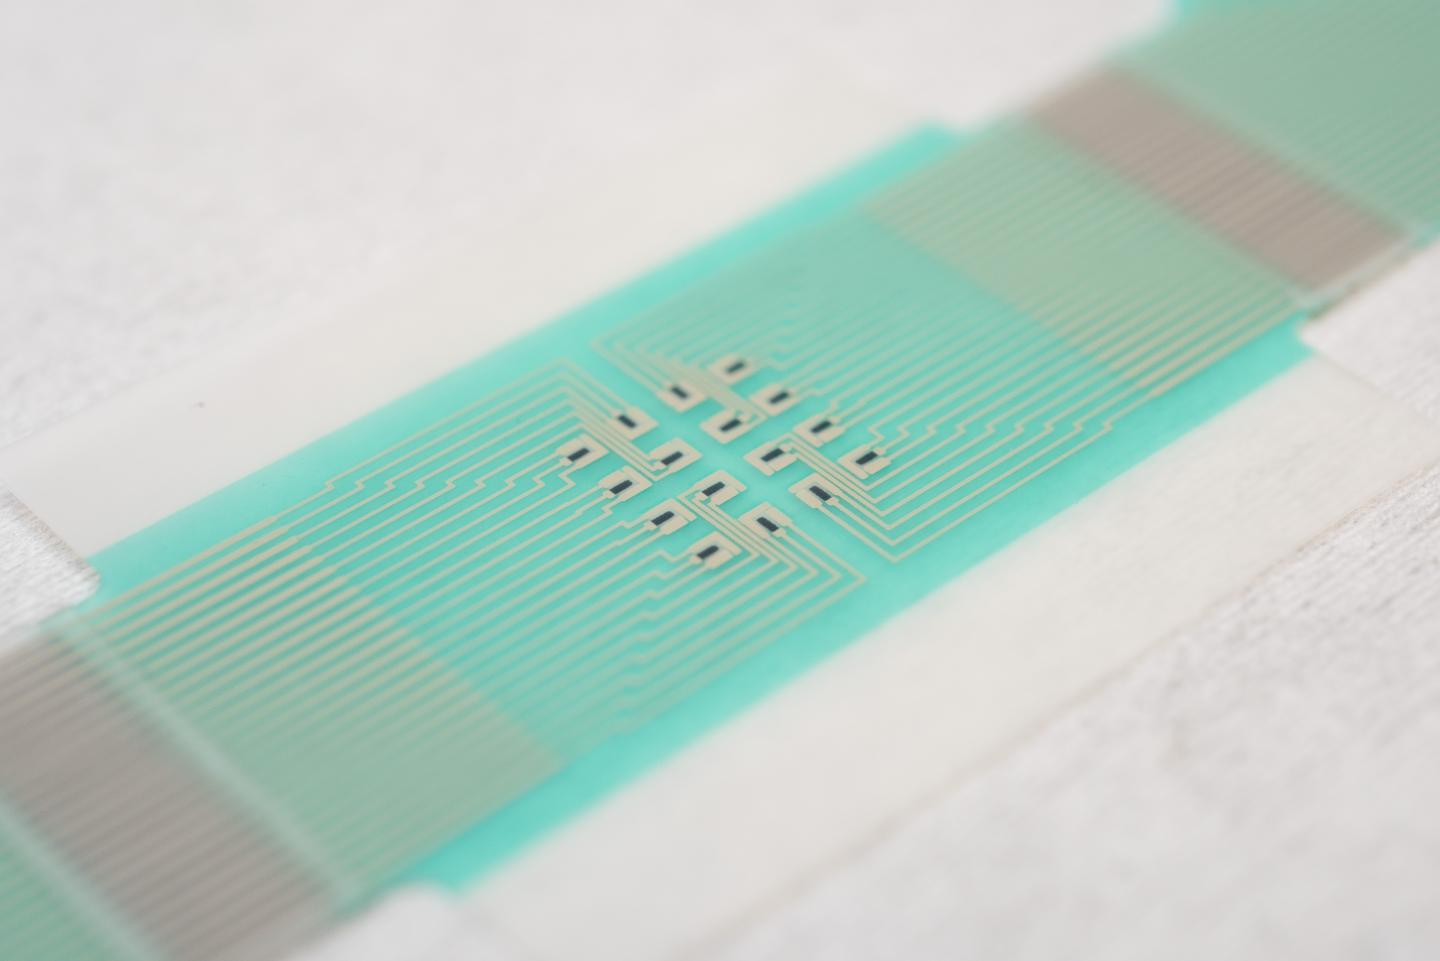 The sensor array is designed to draw fluid across a single hair follicle. (Source: University of Bath)